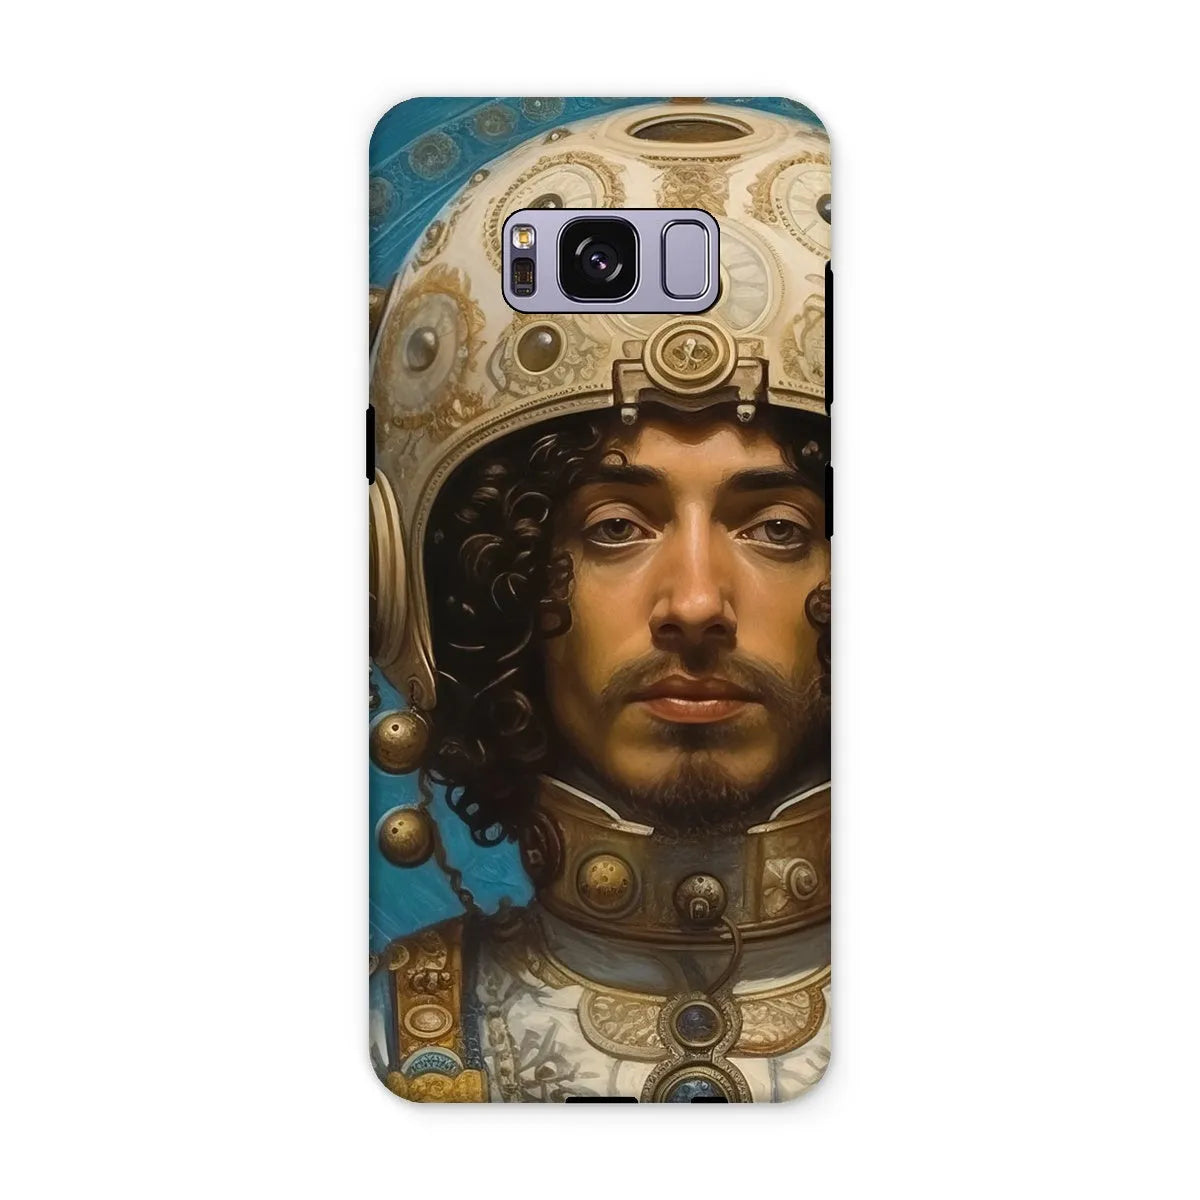 Mehdi The Gay Astronaut - Lgbtq Art Phone Case - Samsung Galaxy S8 Plus / Matte - Mobile Phone Cases - Aesthetic Art